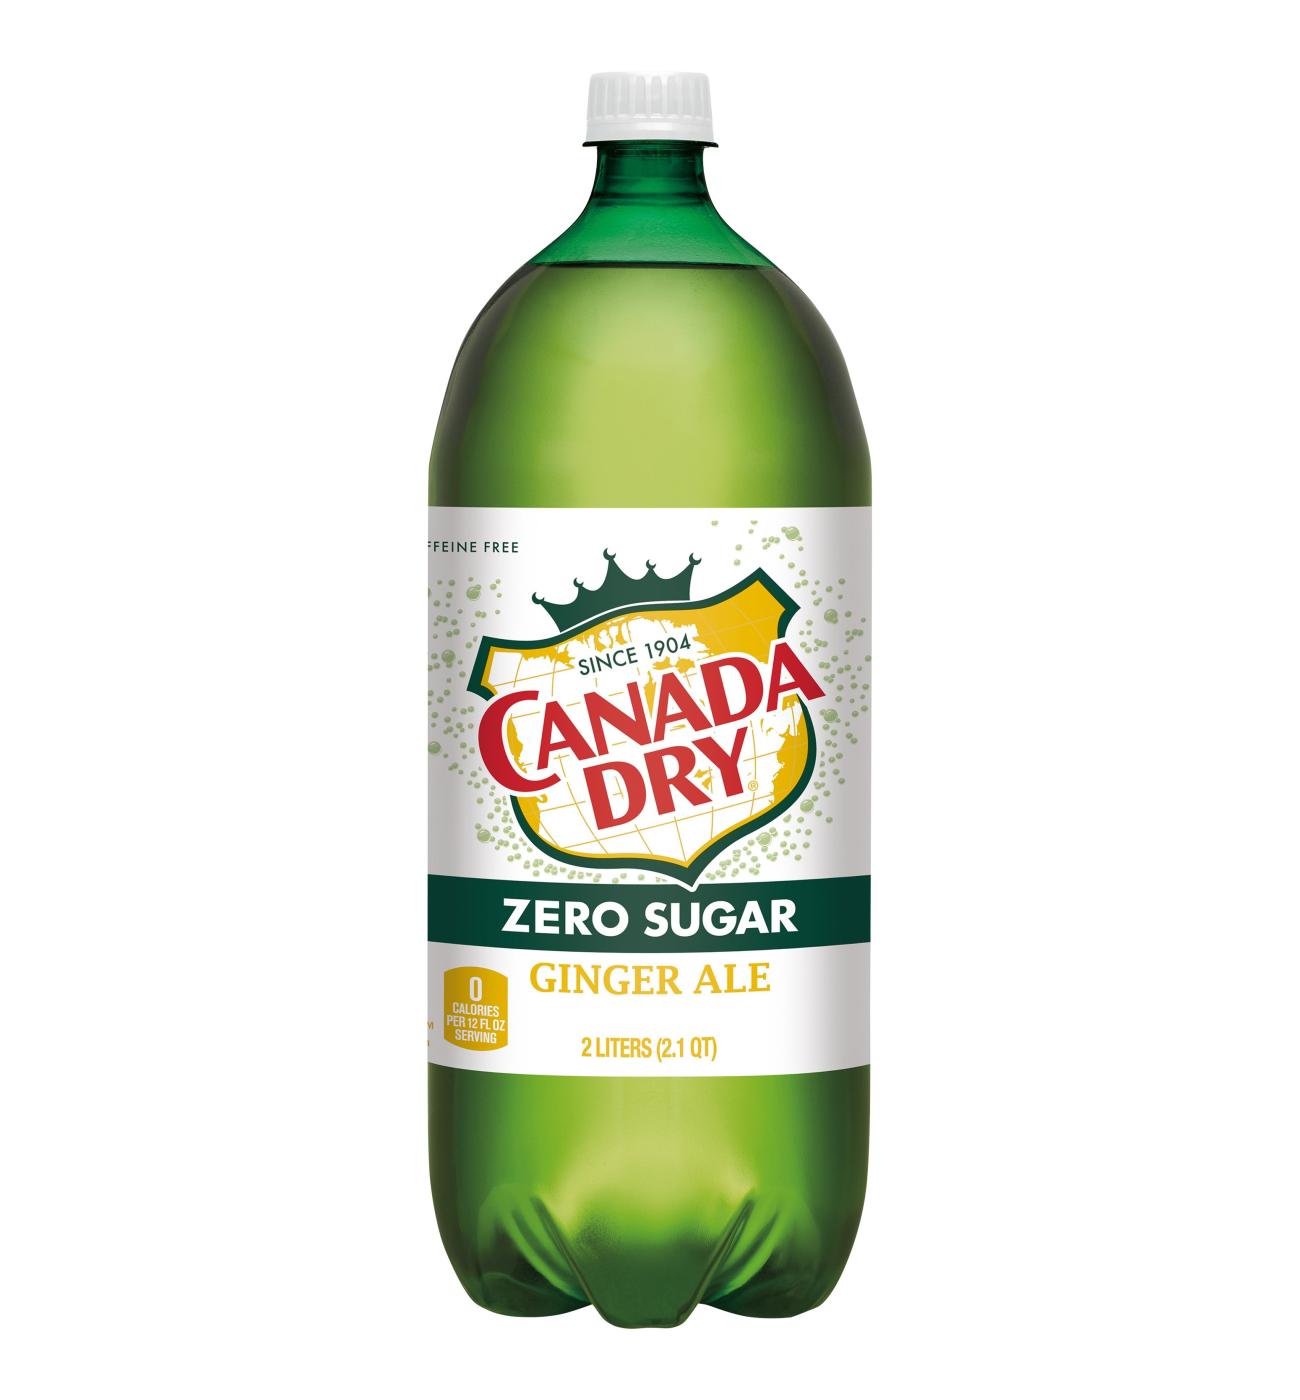 Canada Dry Zero Sugar Ginger Ale; image 1 of 2